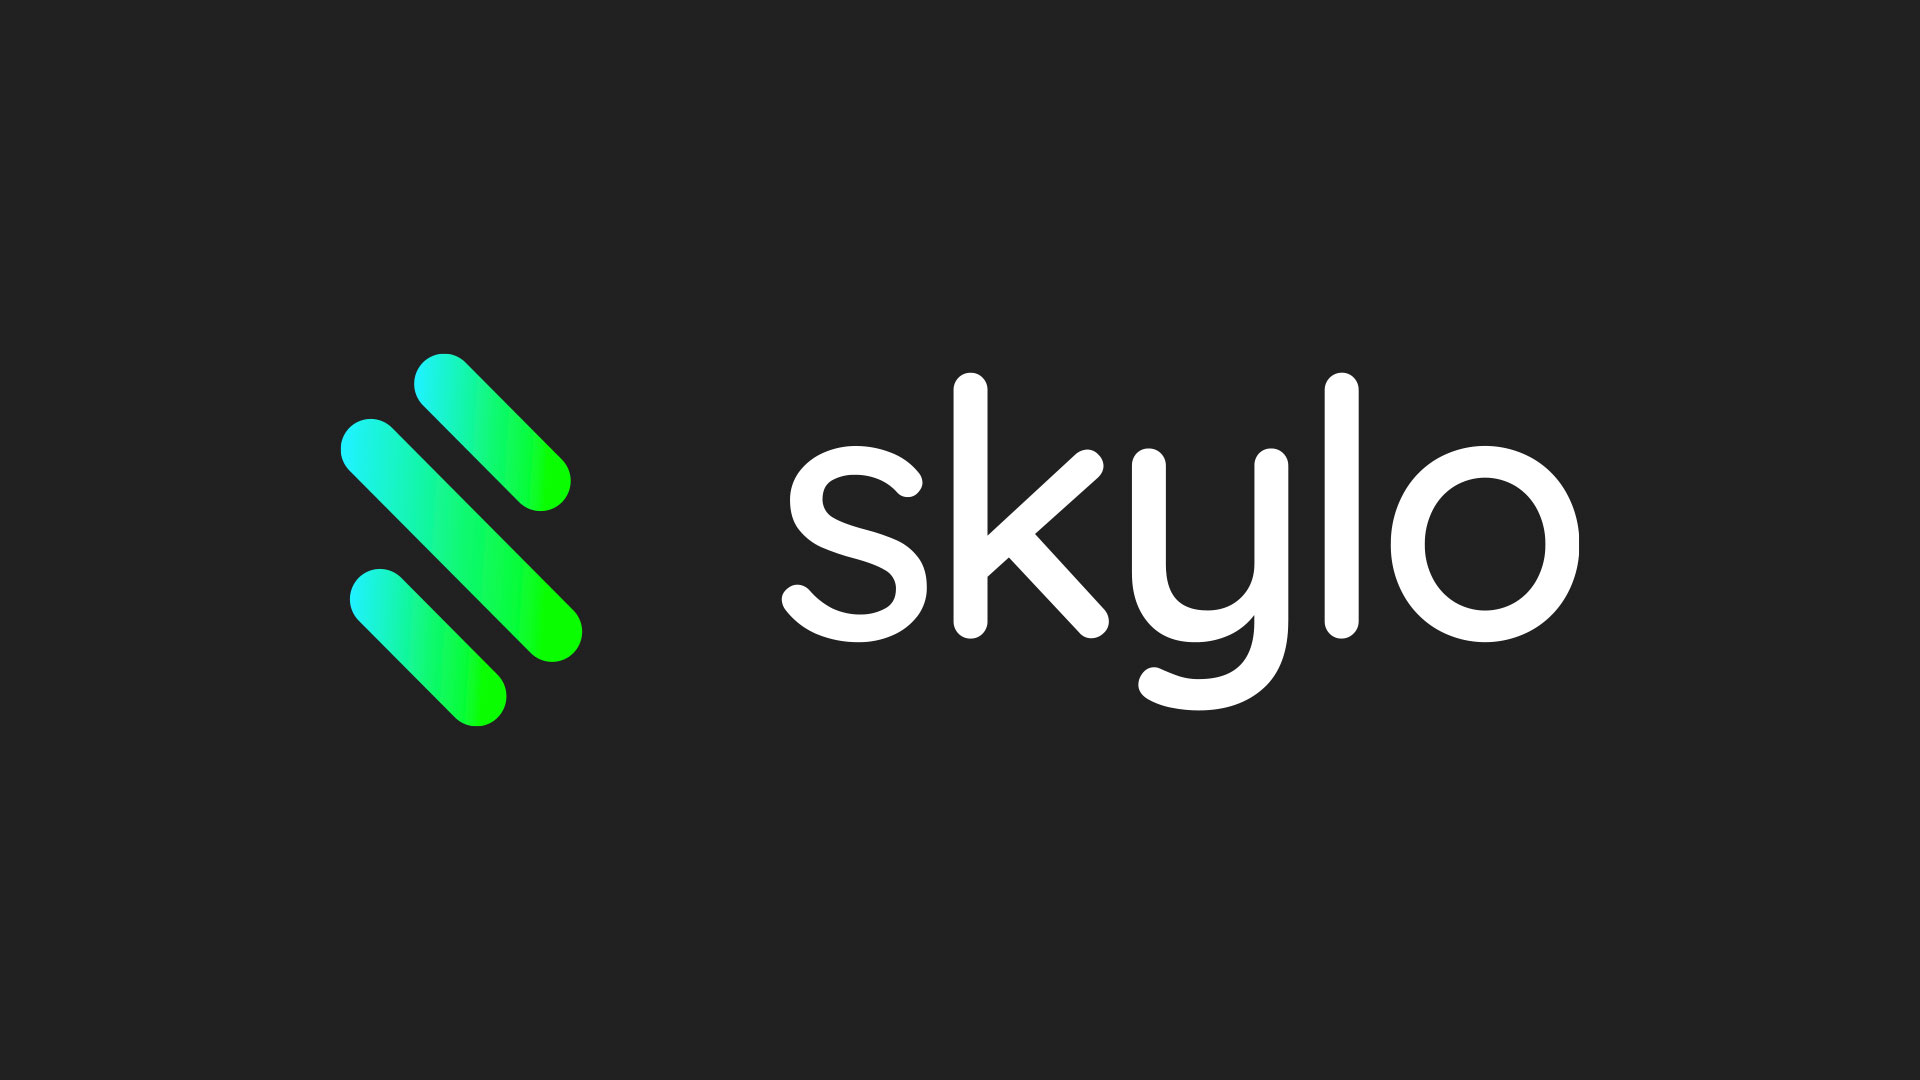 Skylo + Intel Capital